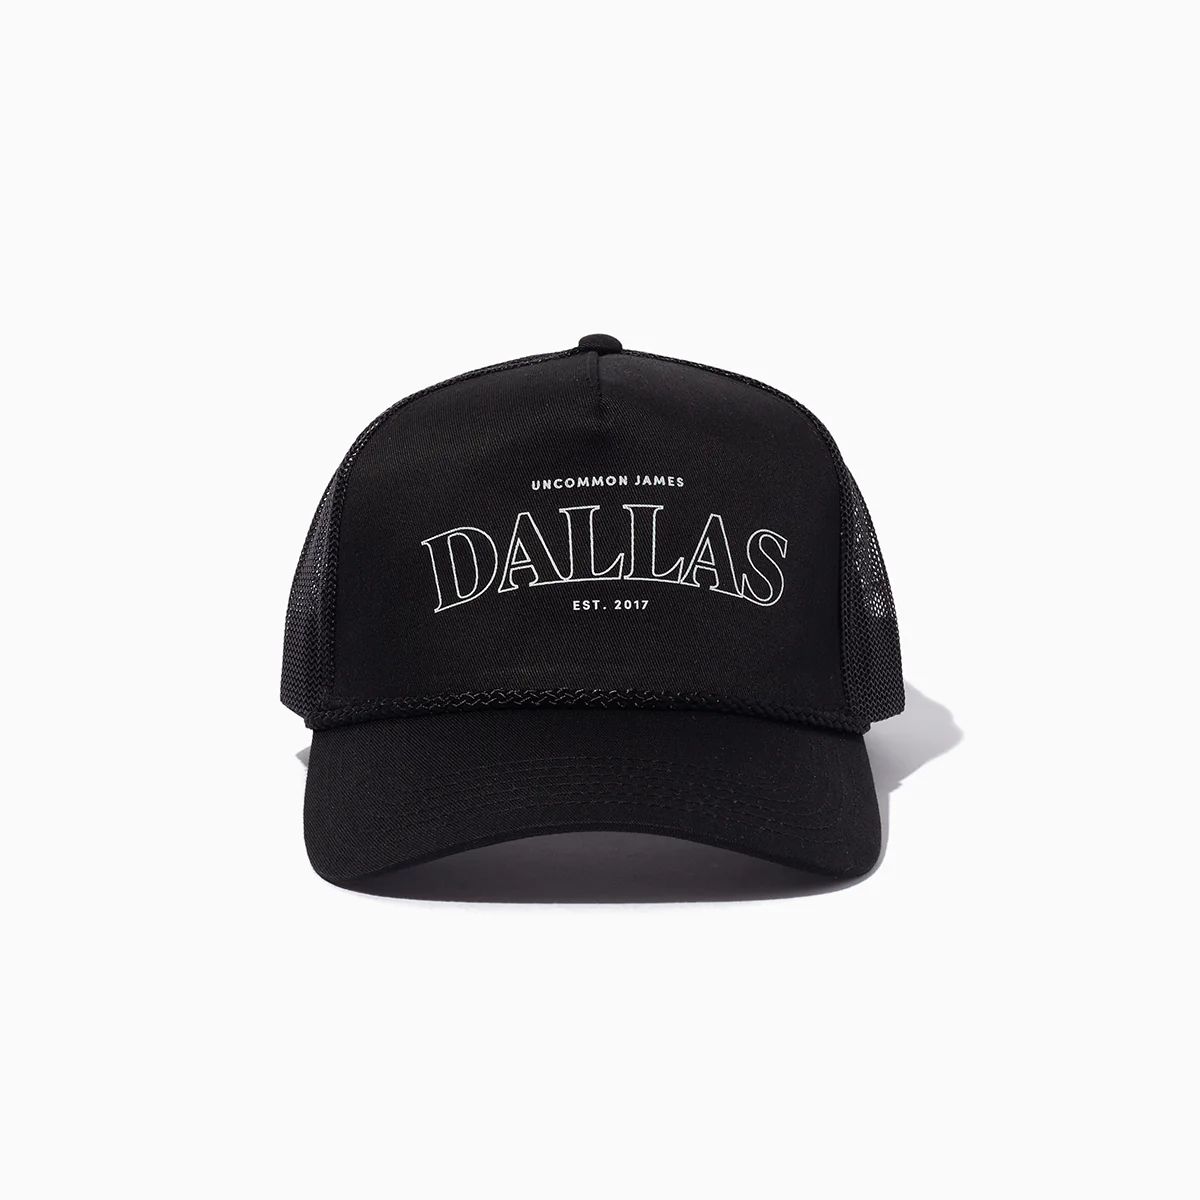 Dallas Trucker Hat in Black and Beige | Uncommon James | Uncommon James